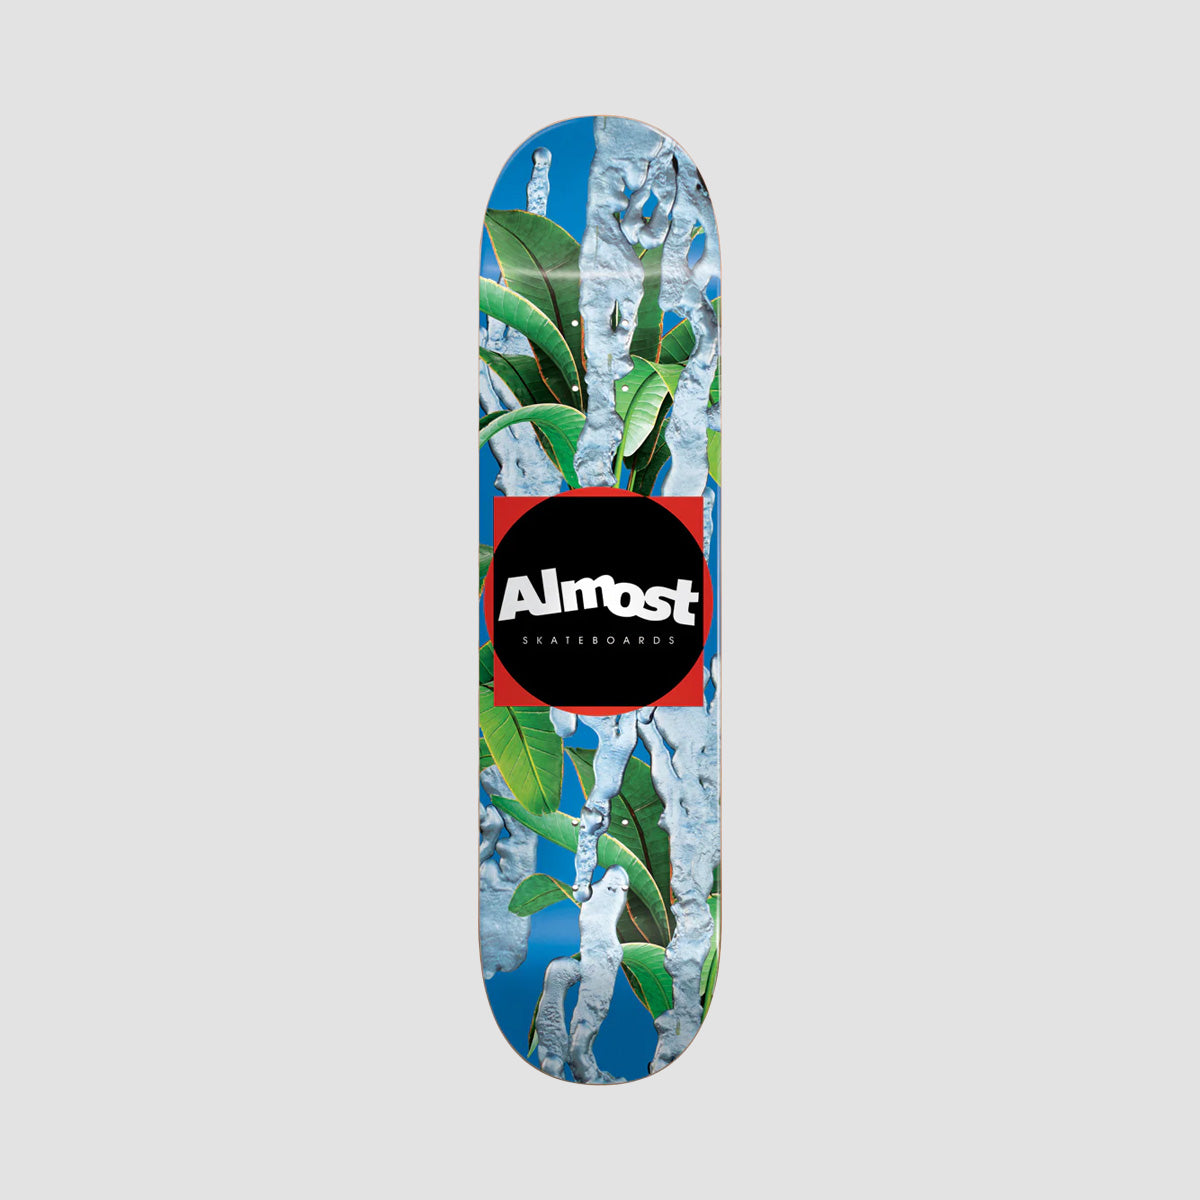 Almost Metal Hybrid Skateboard Deck Blue - 8.125"